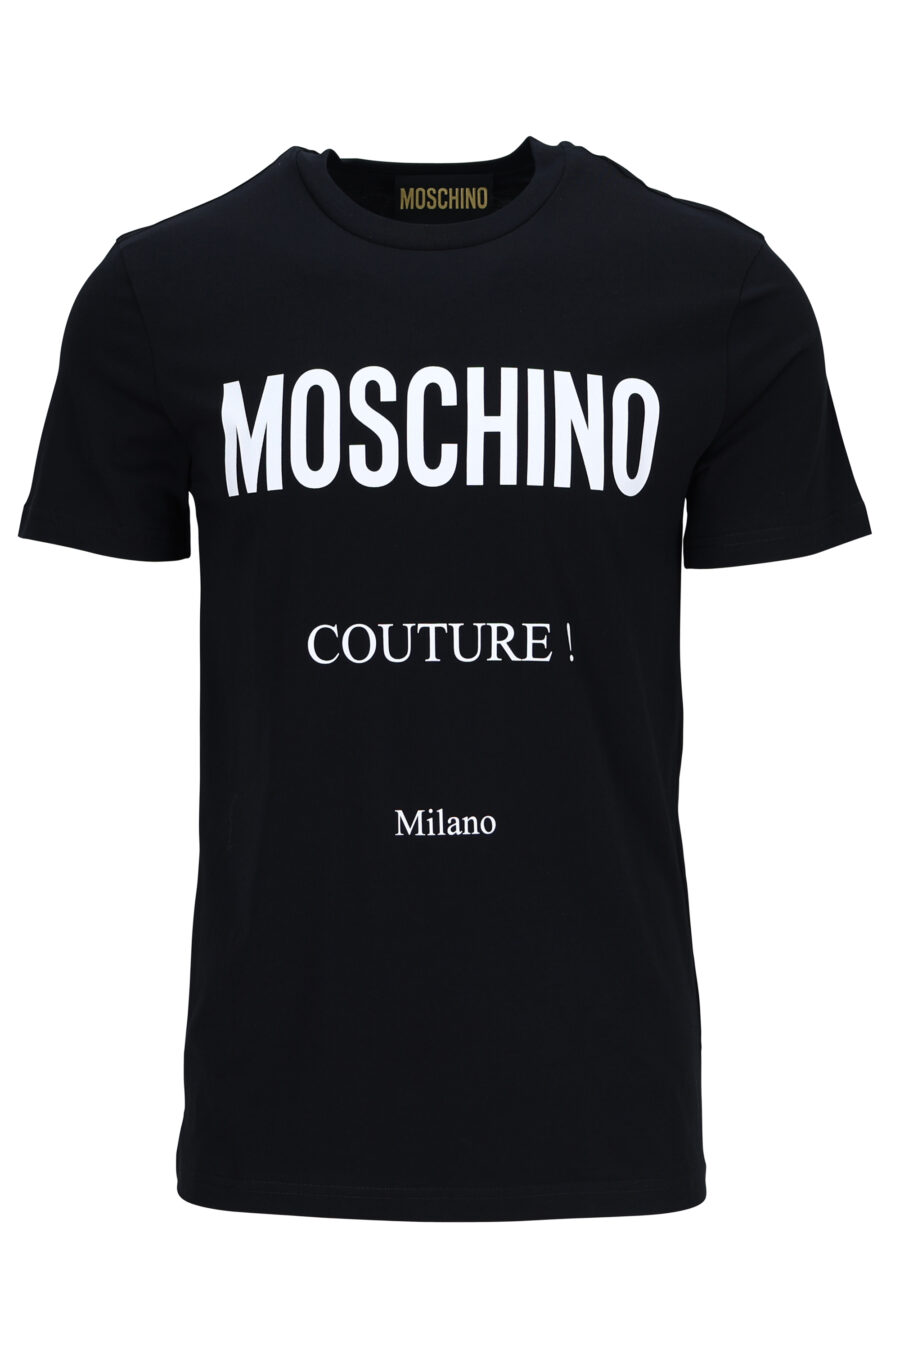 Schwarzes T-Shirt mit Maxilogue "couture milano" - 889316936551